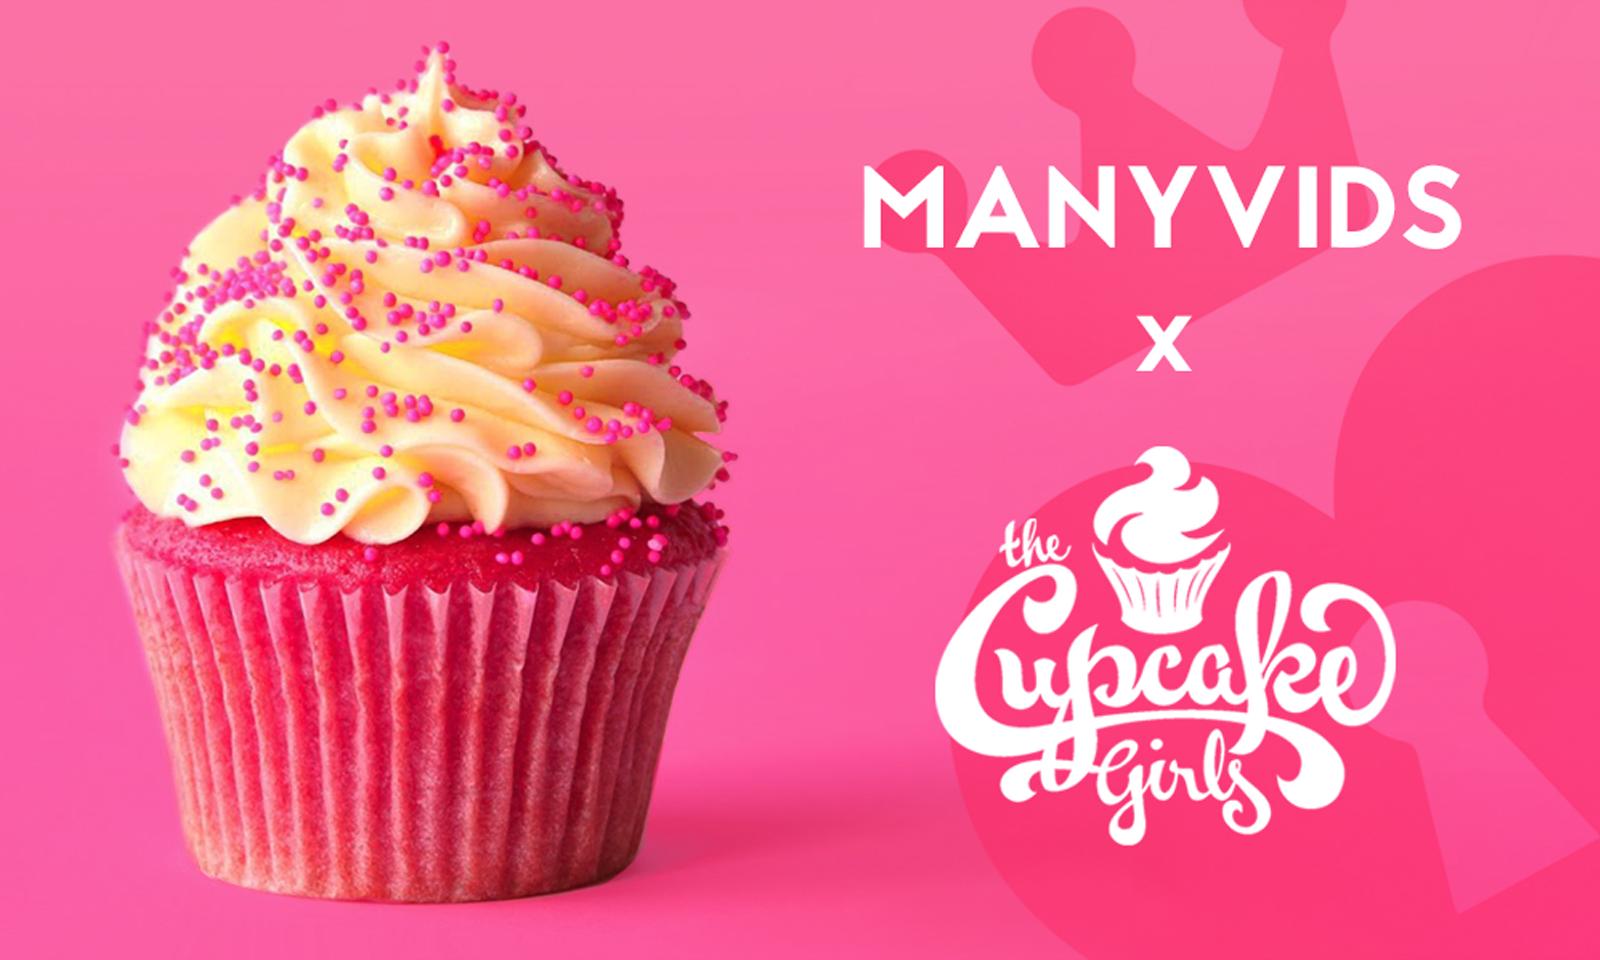 “ManyVids Announces Cupcake Girls Sponsorship
https://t.co/0MPKHRWp...